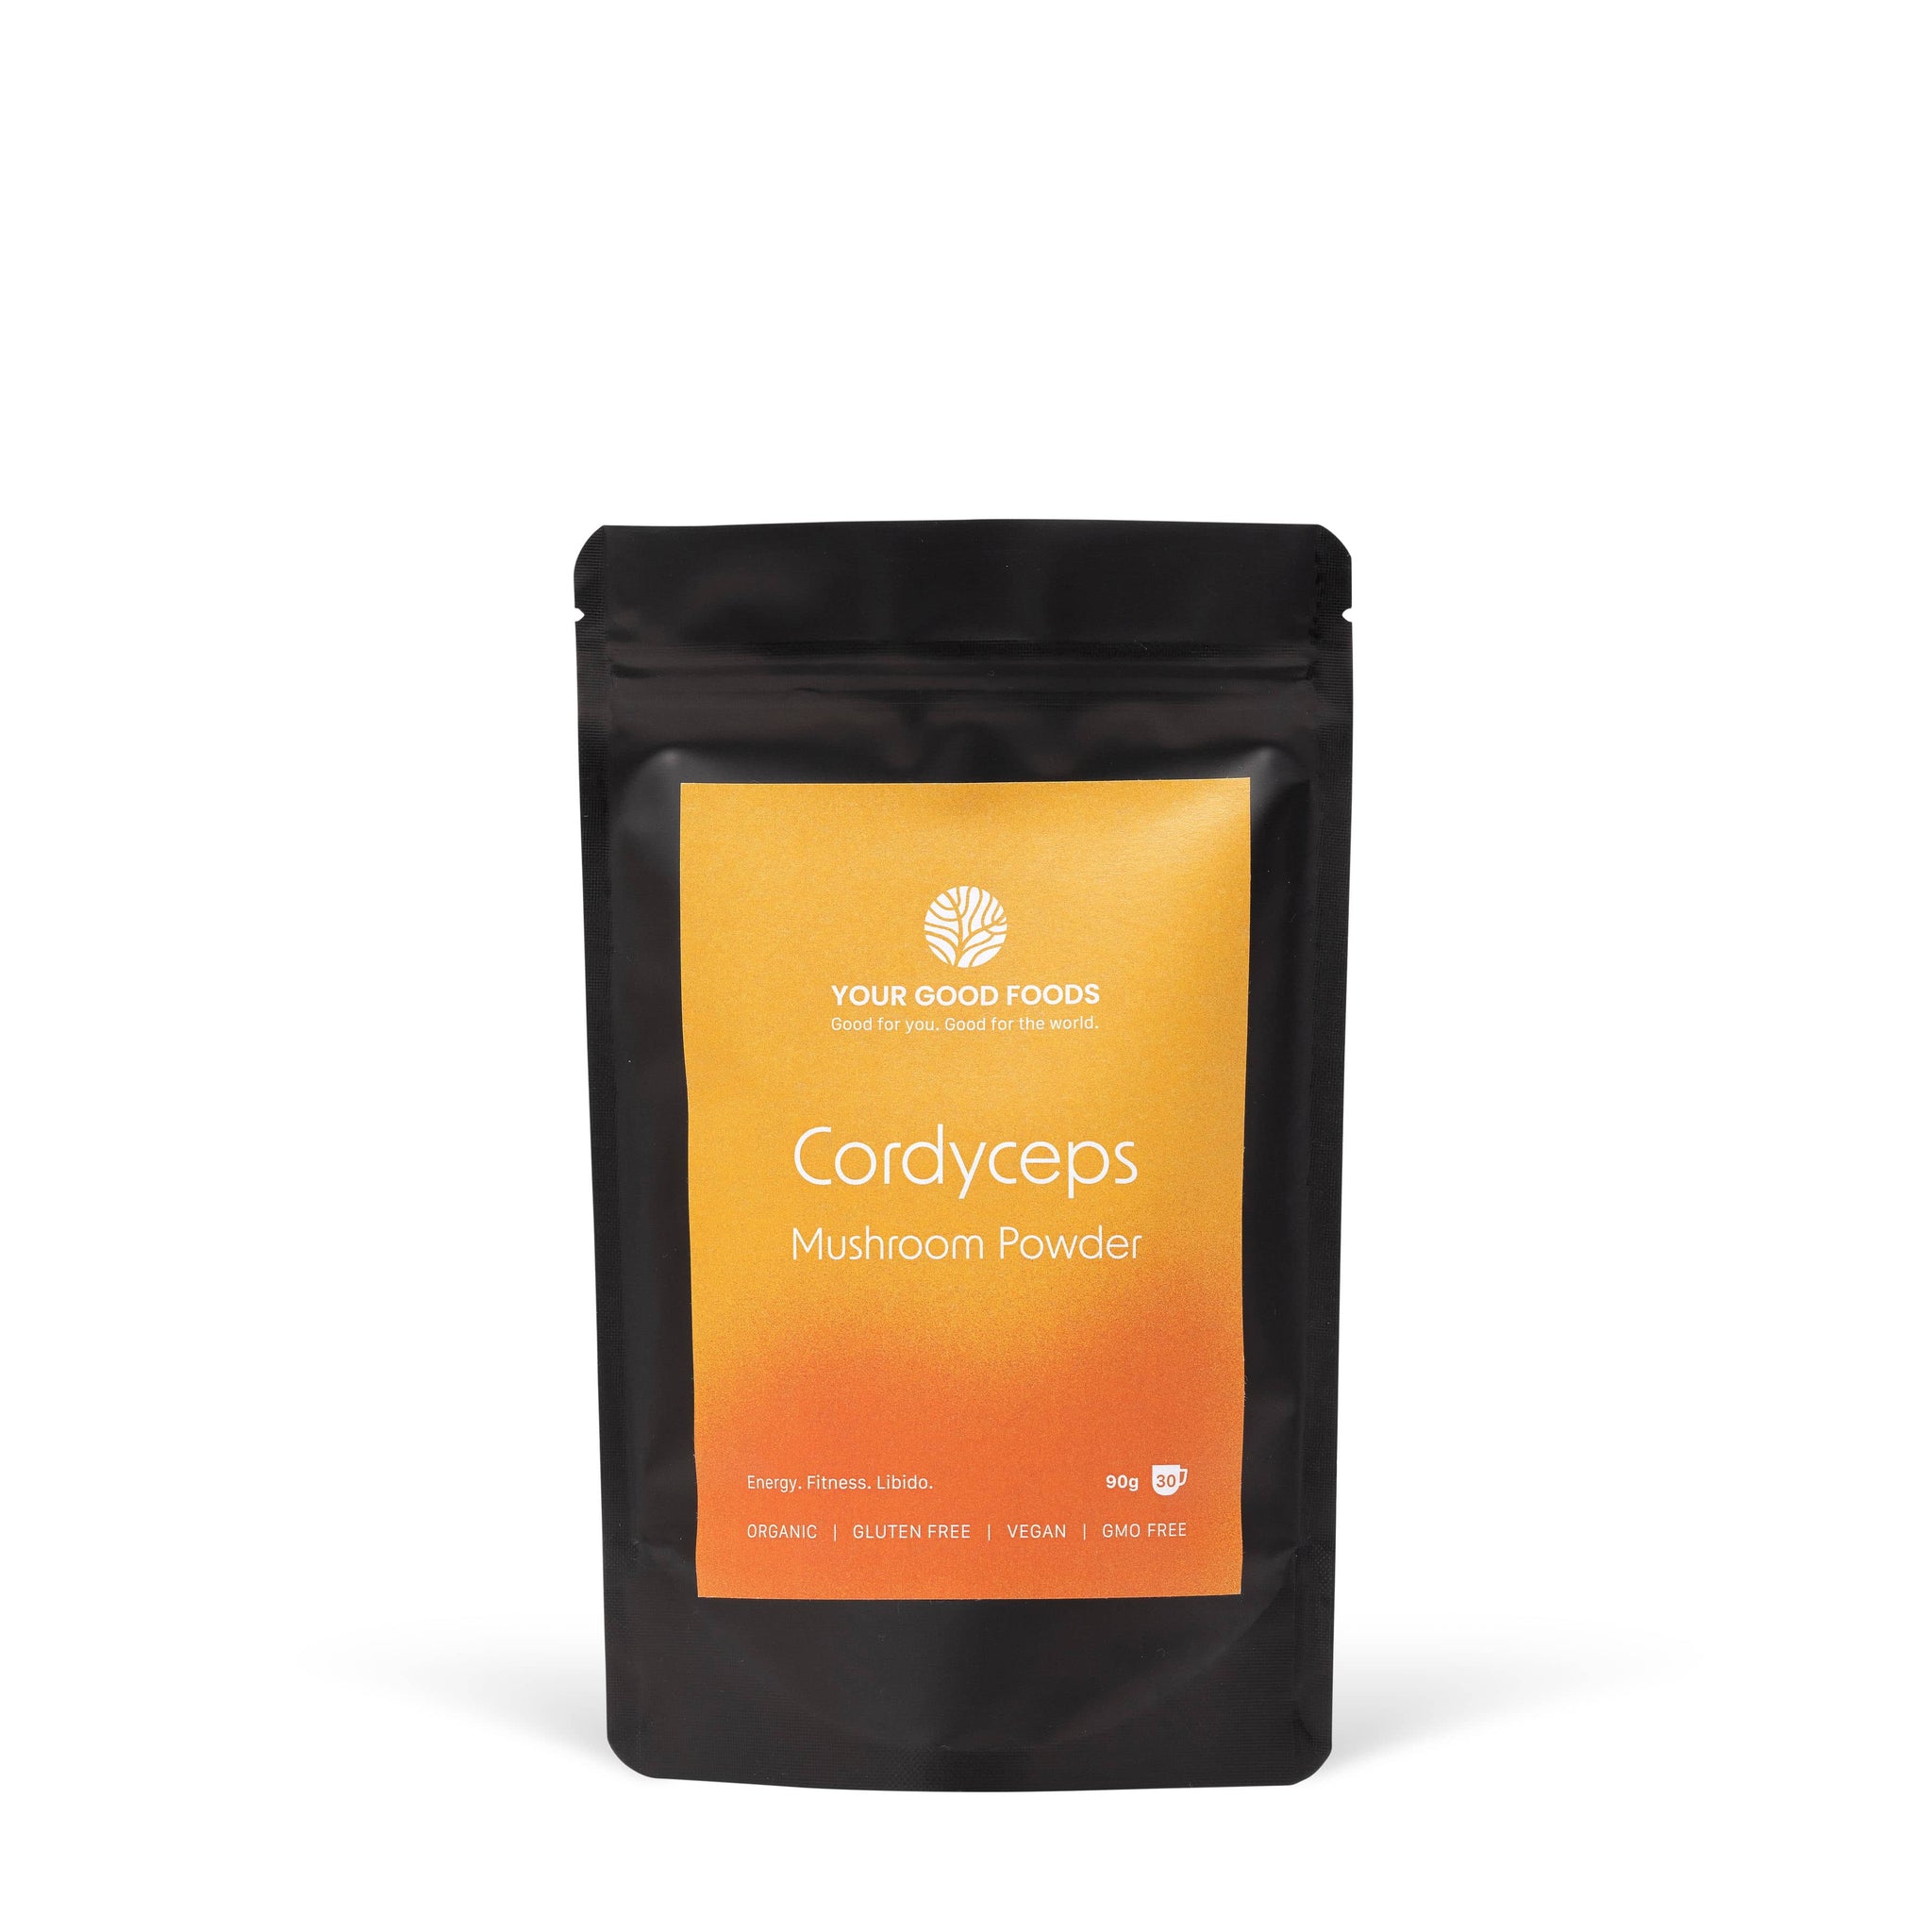 Australian Cordyceps Mushroom Powder, 90g | The Poop Coffee